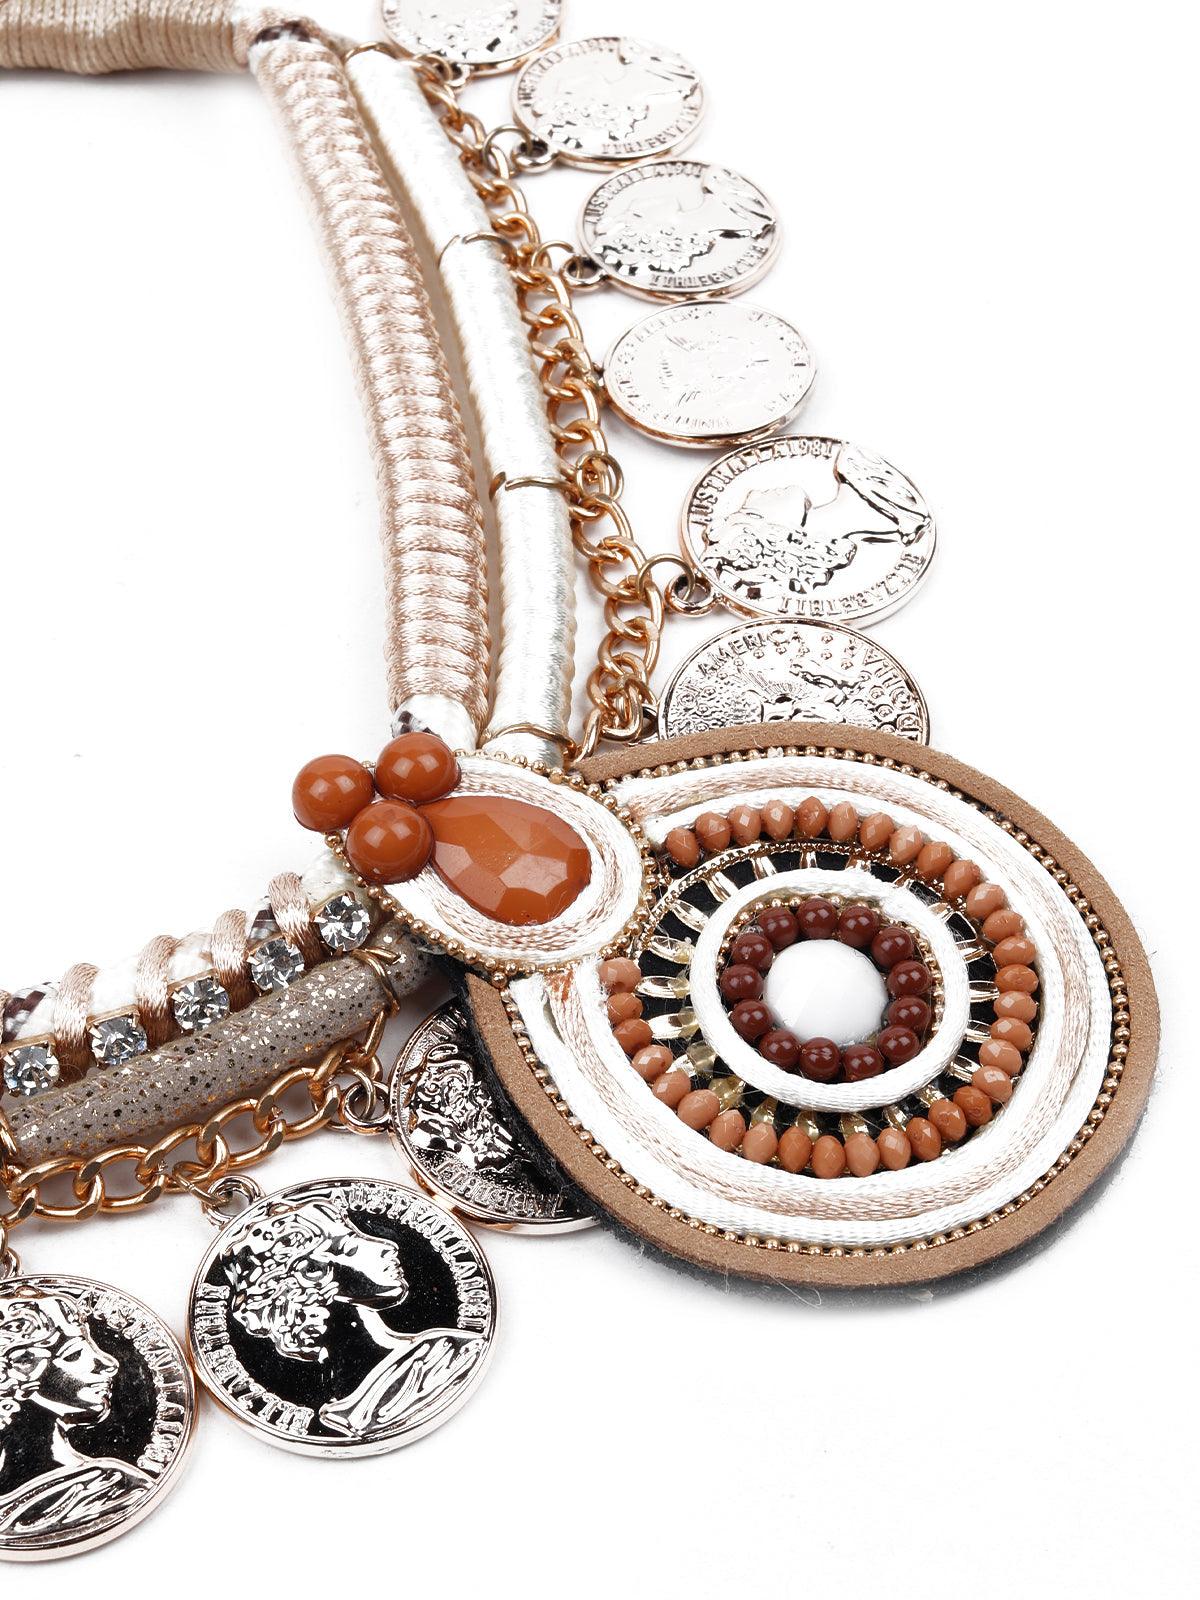 Heavy charms embellished necklace - Odette